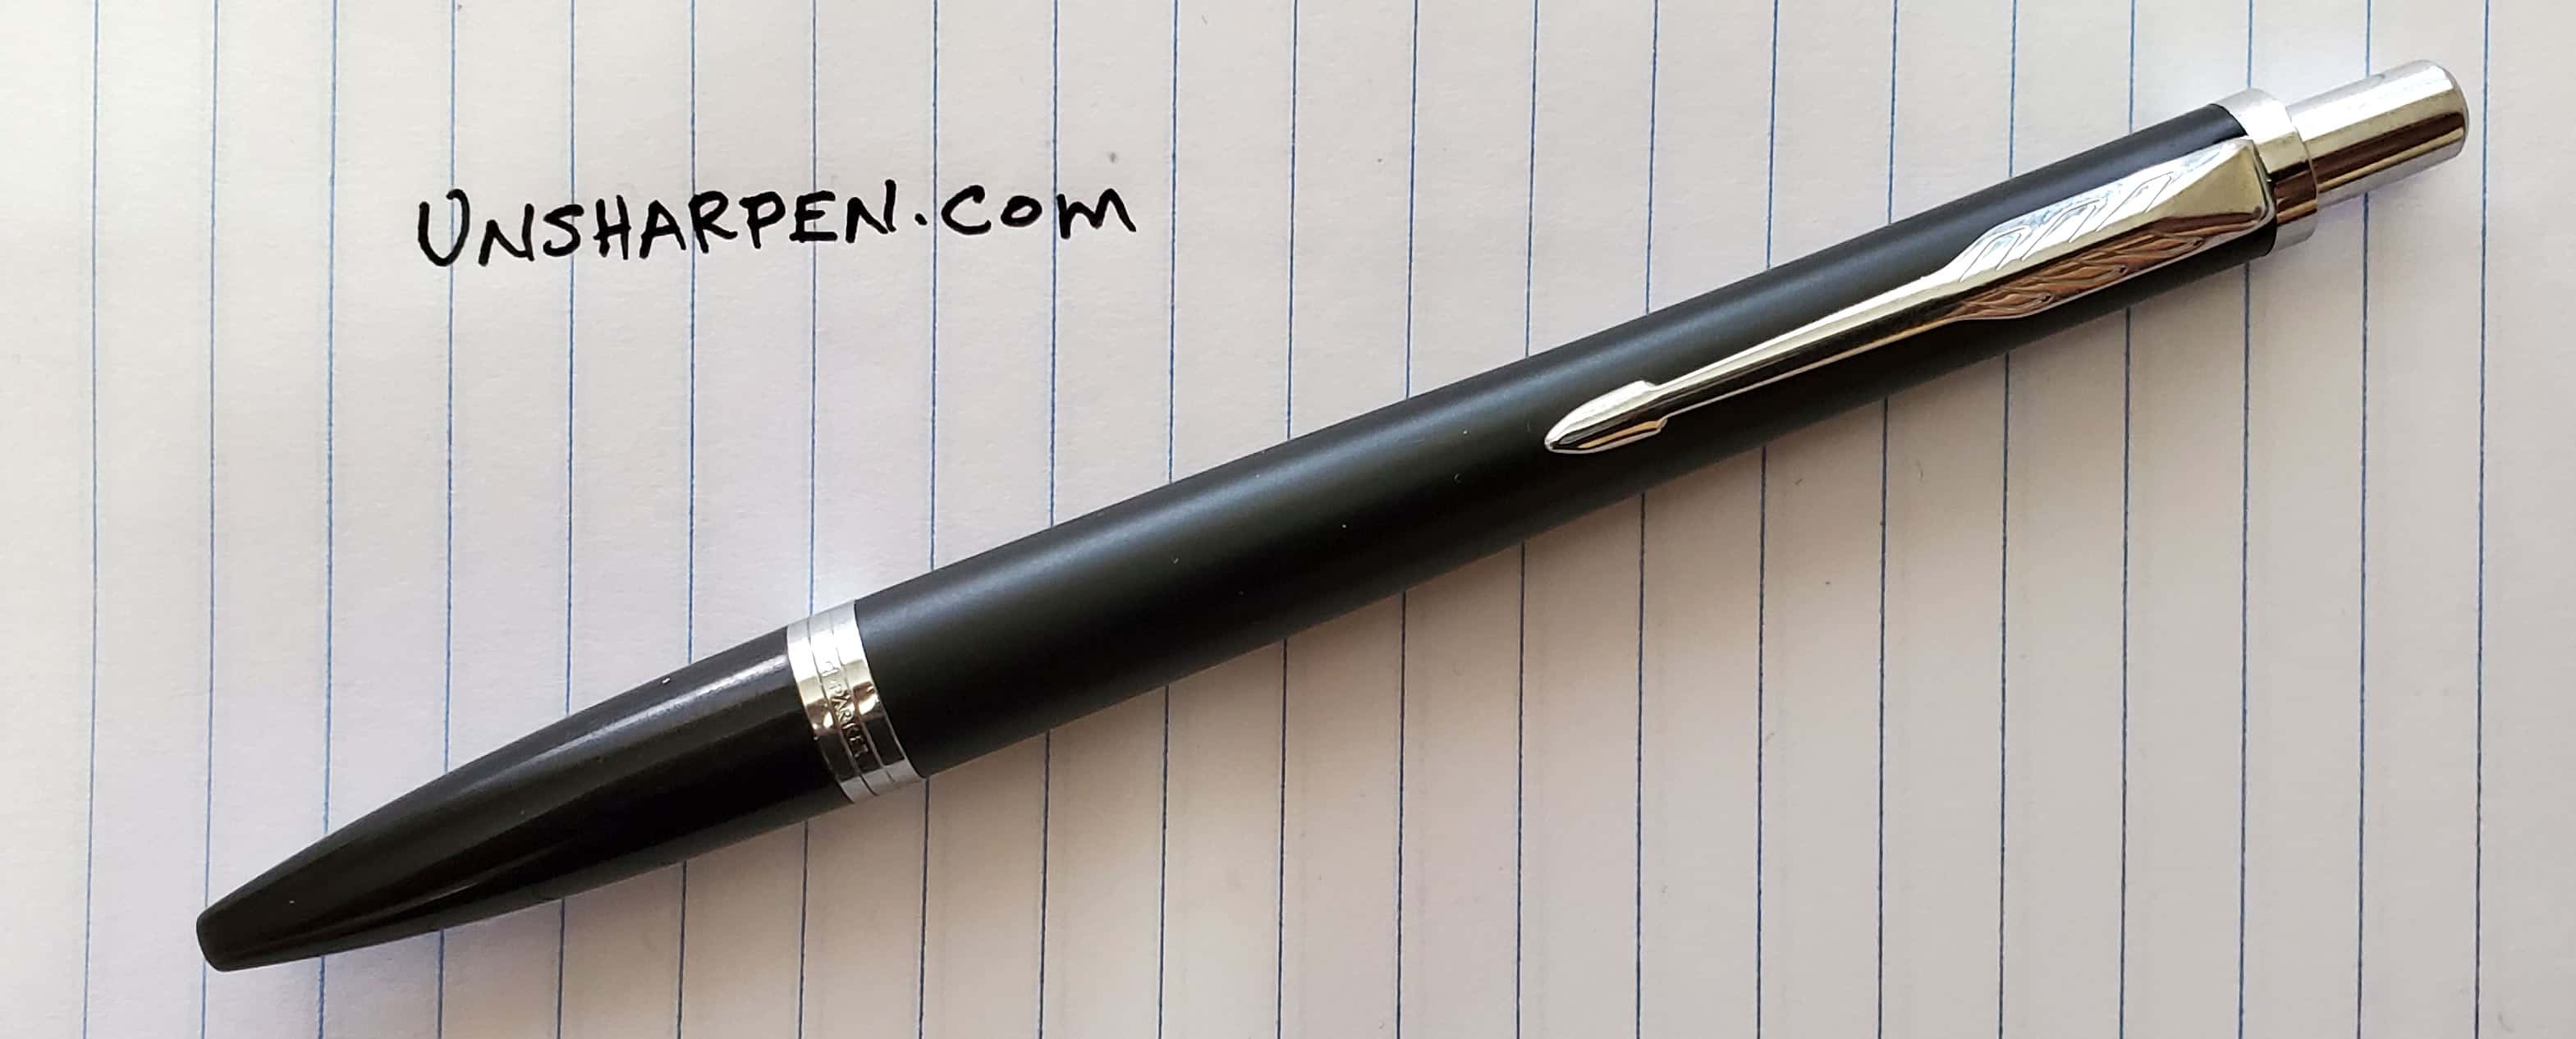 Parker-type tip pen